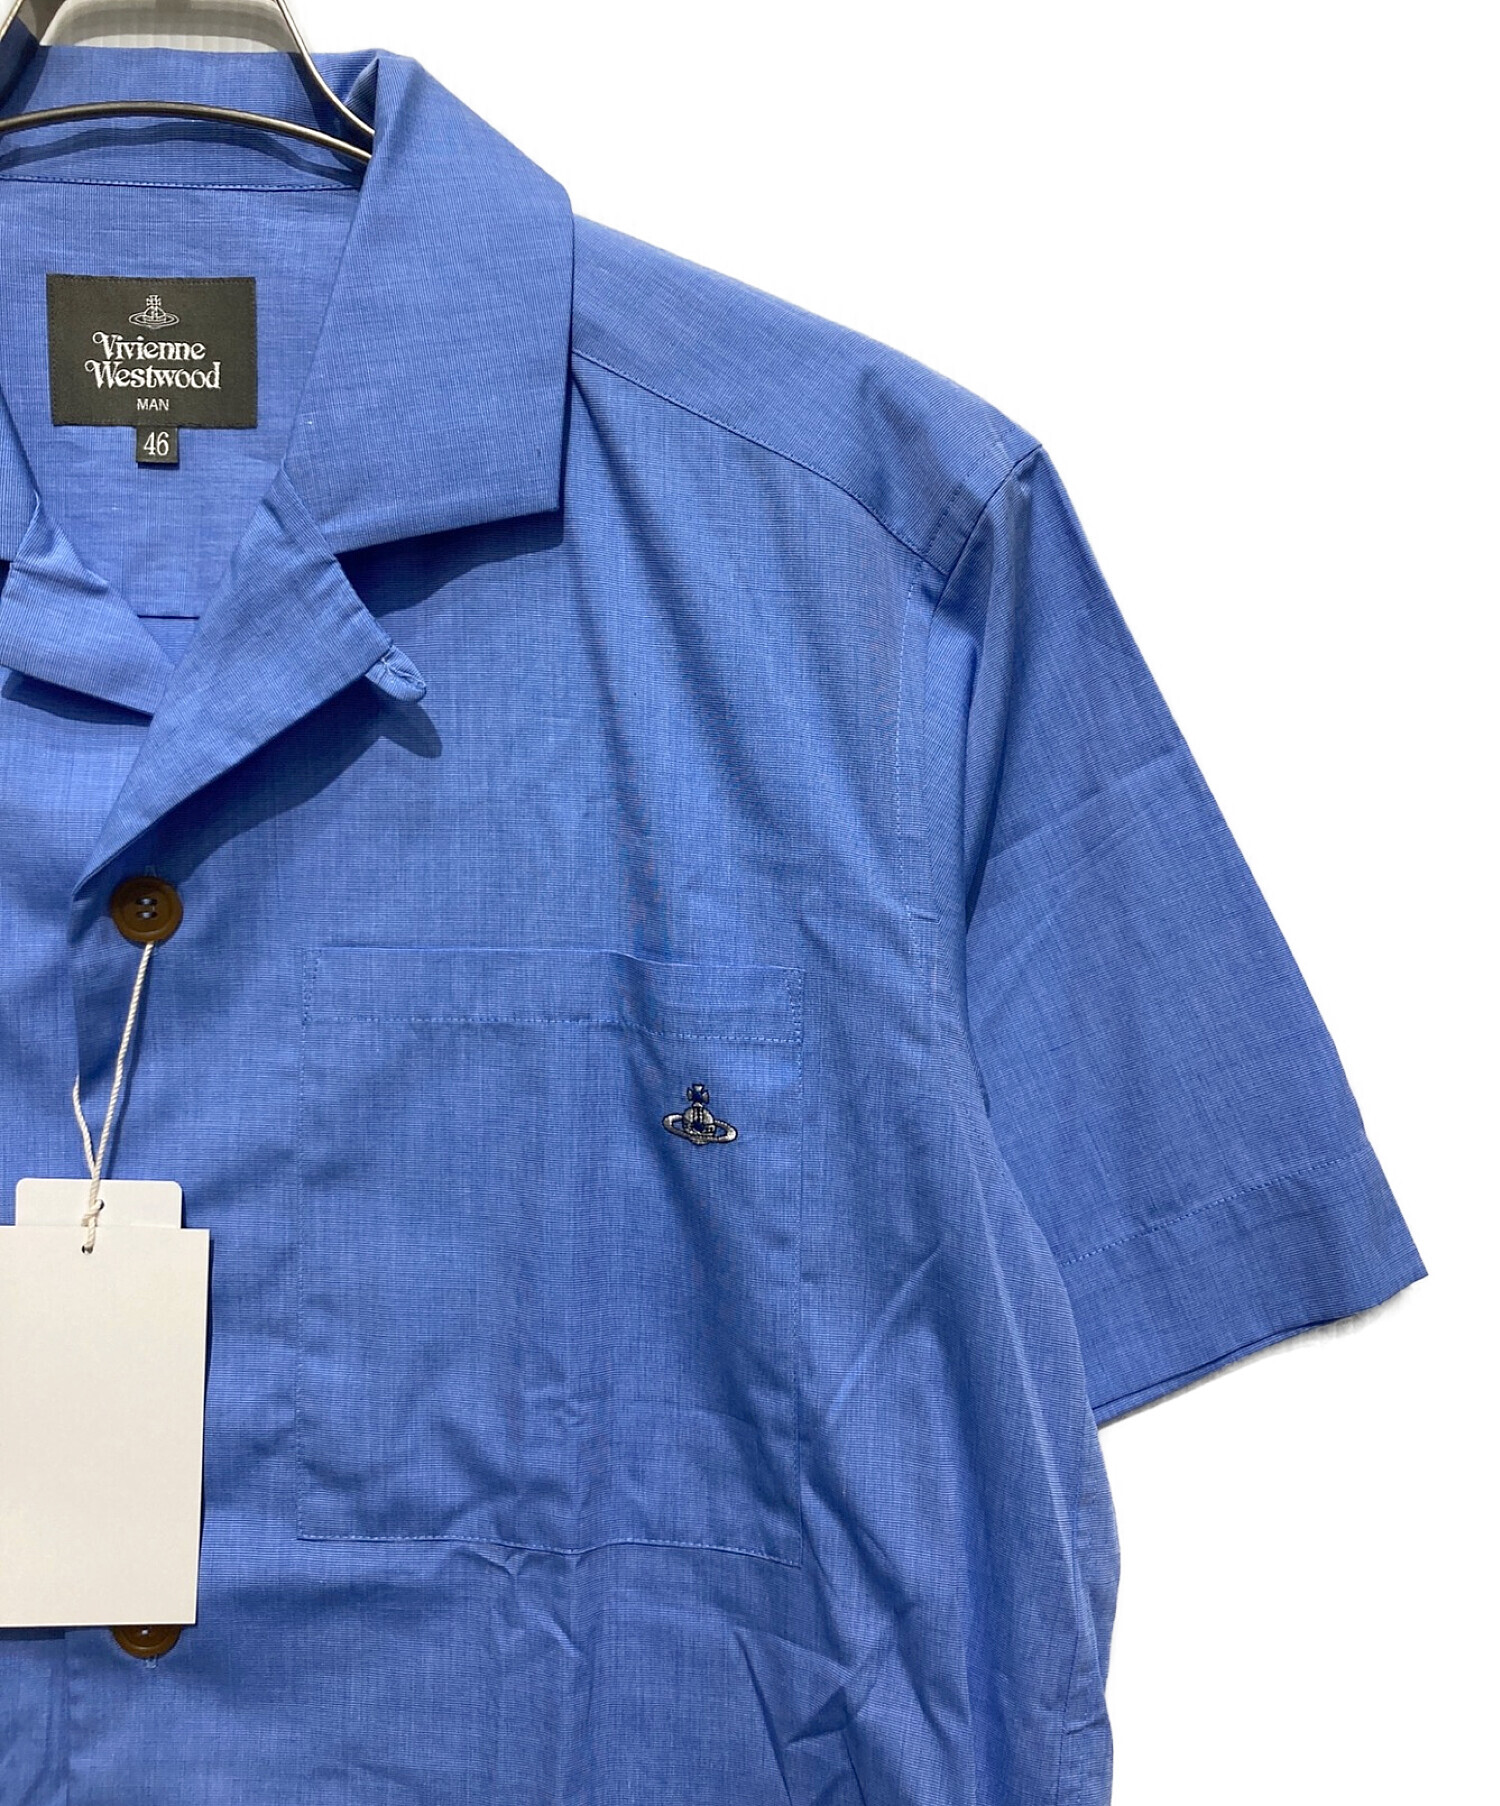 Vivienne Westwood man (ヴィヴィアン ウェストウッド マン) オープンカラーオーブシャツ ブルー サイズ:SIZE 46 未使用品